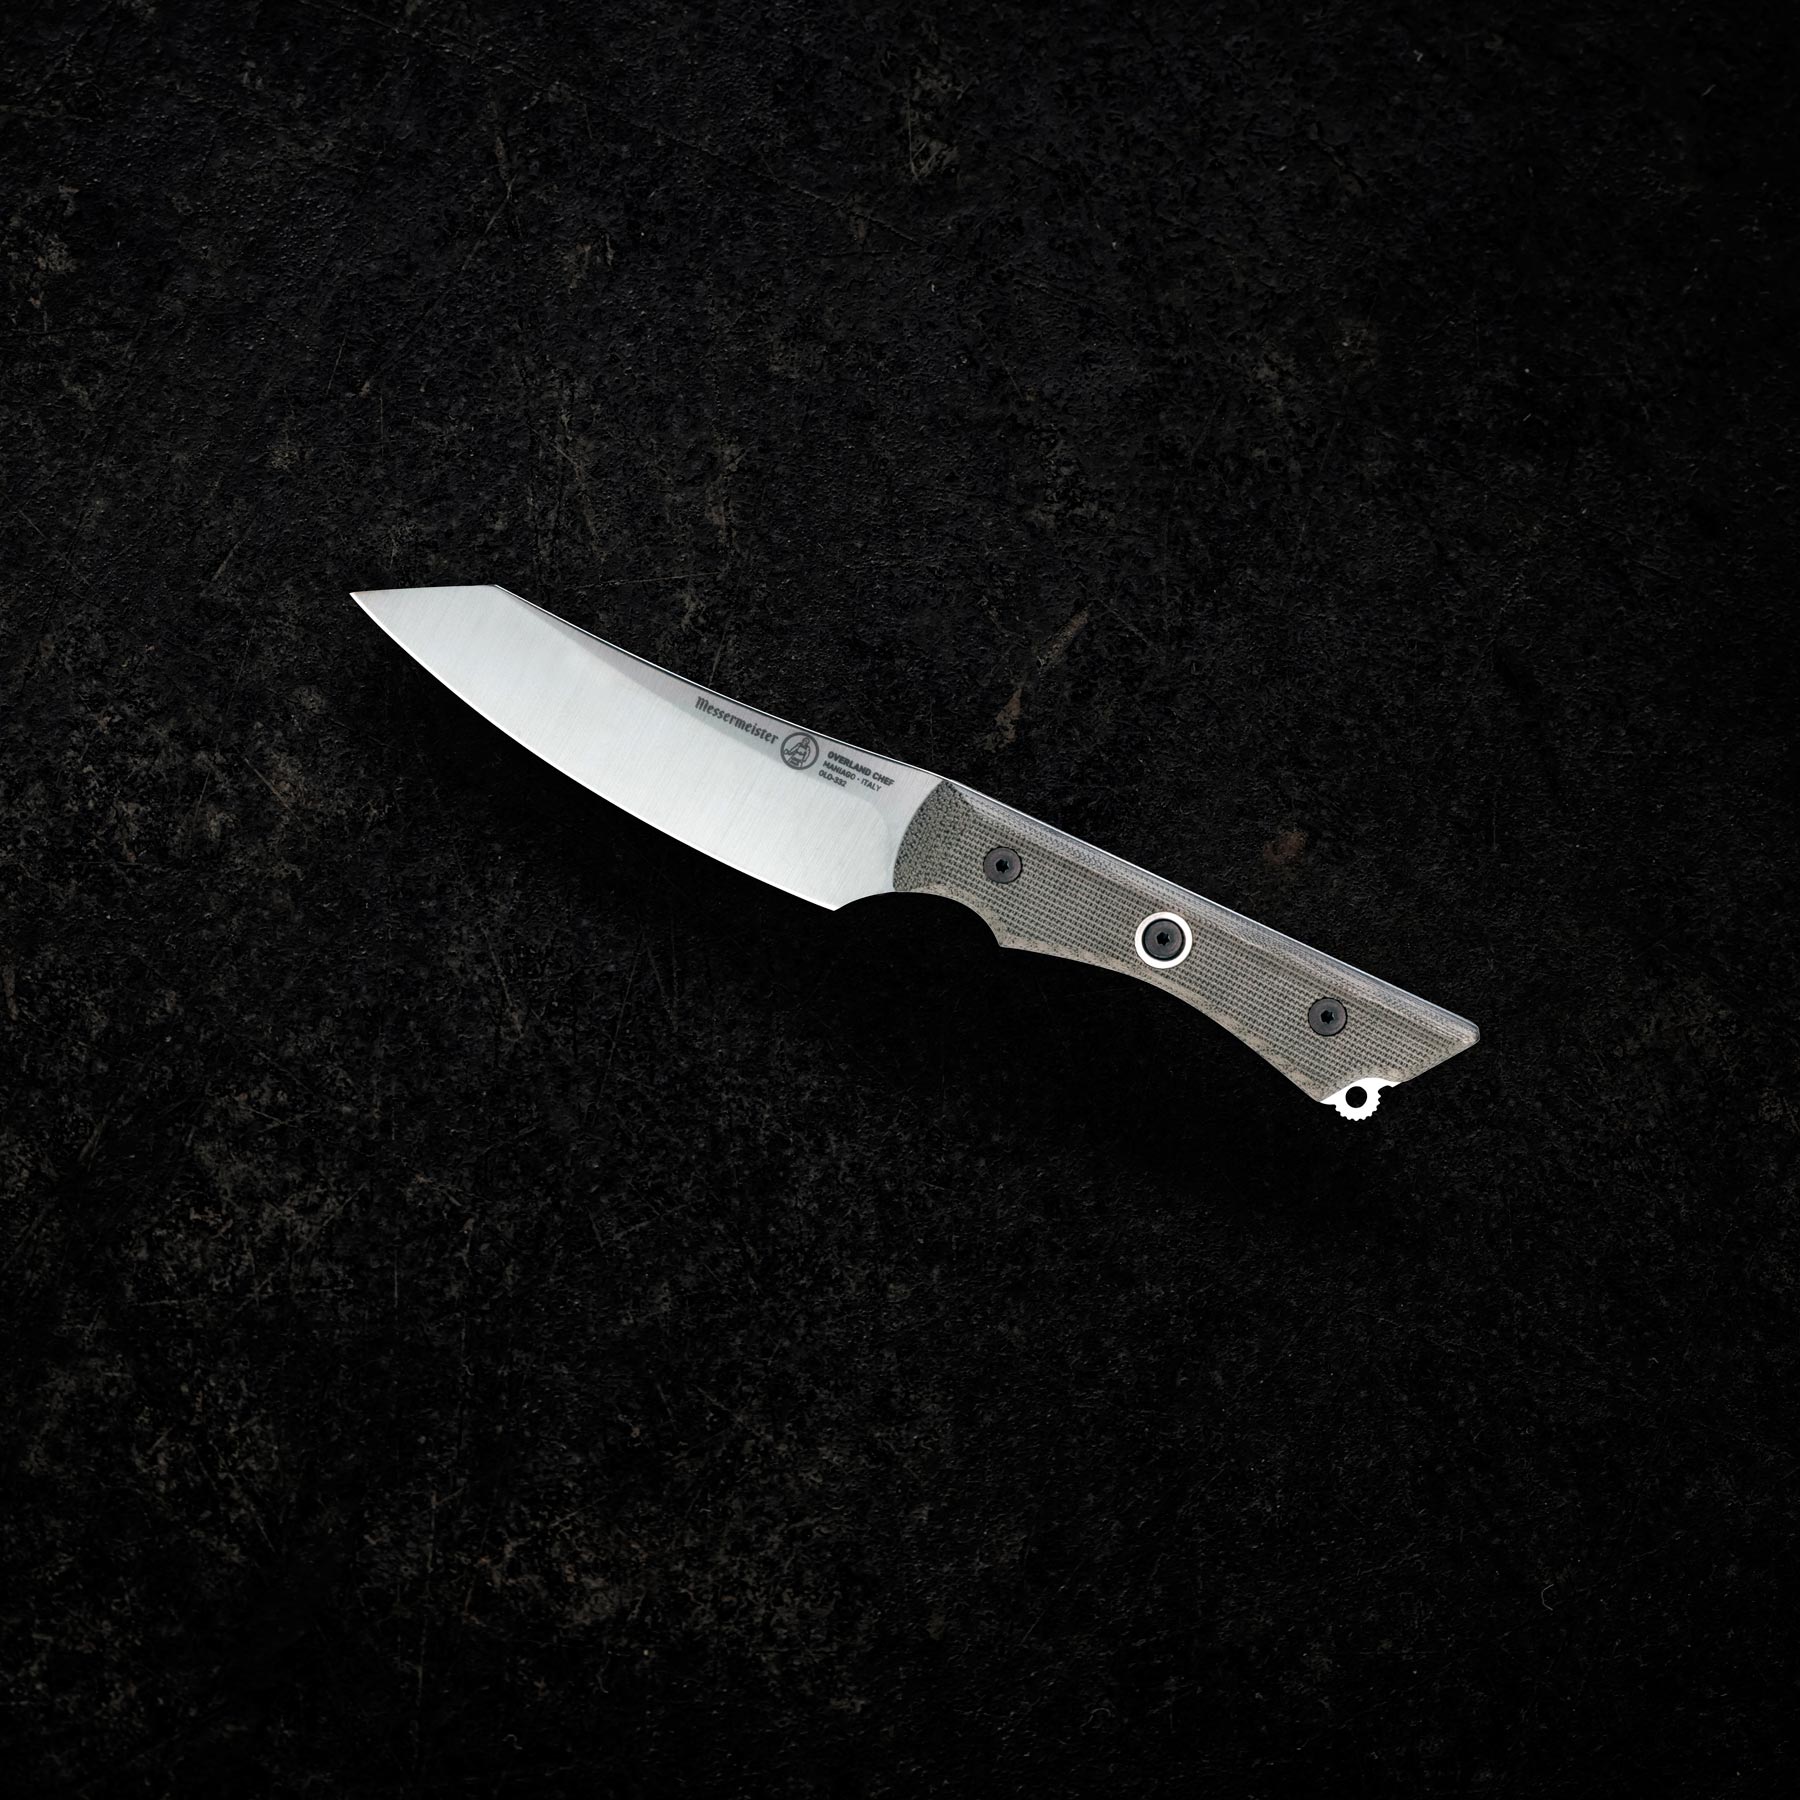 Messermeister Park Plaza 4 Petite Chef's Knife - KnifeCenter - 8005-4 -  Discontinued